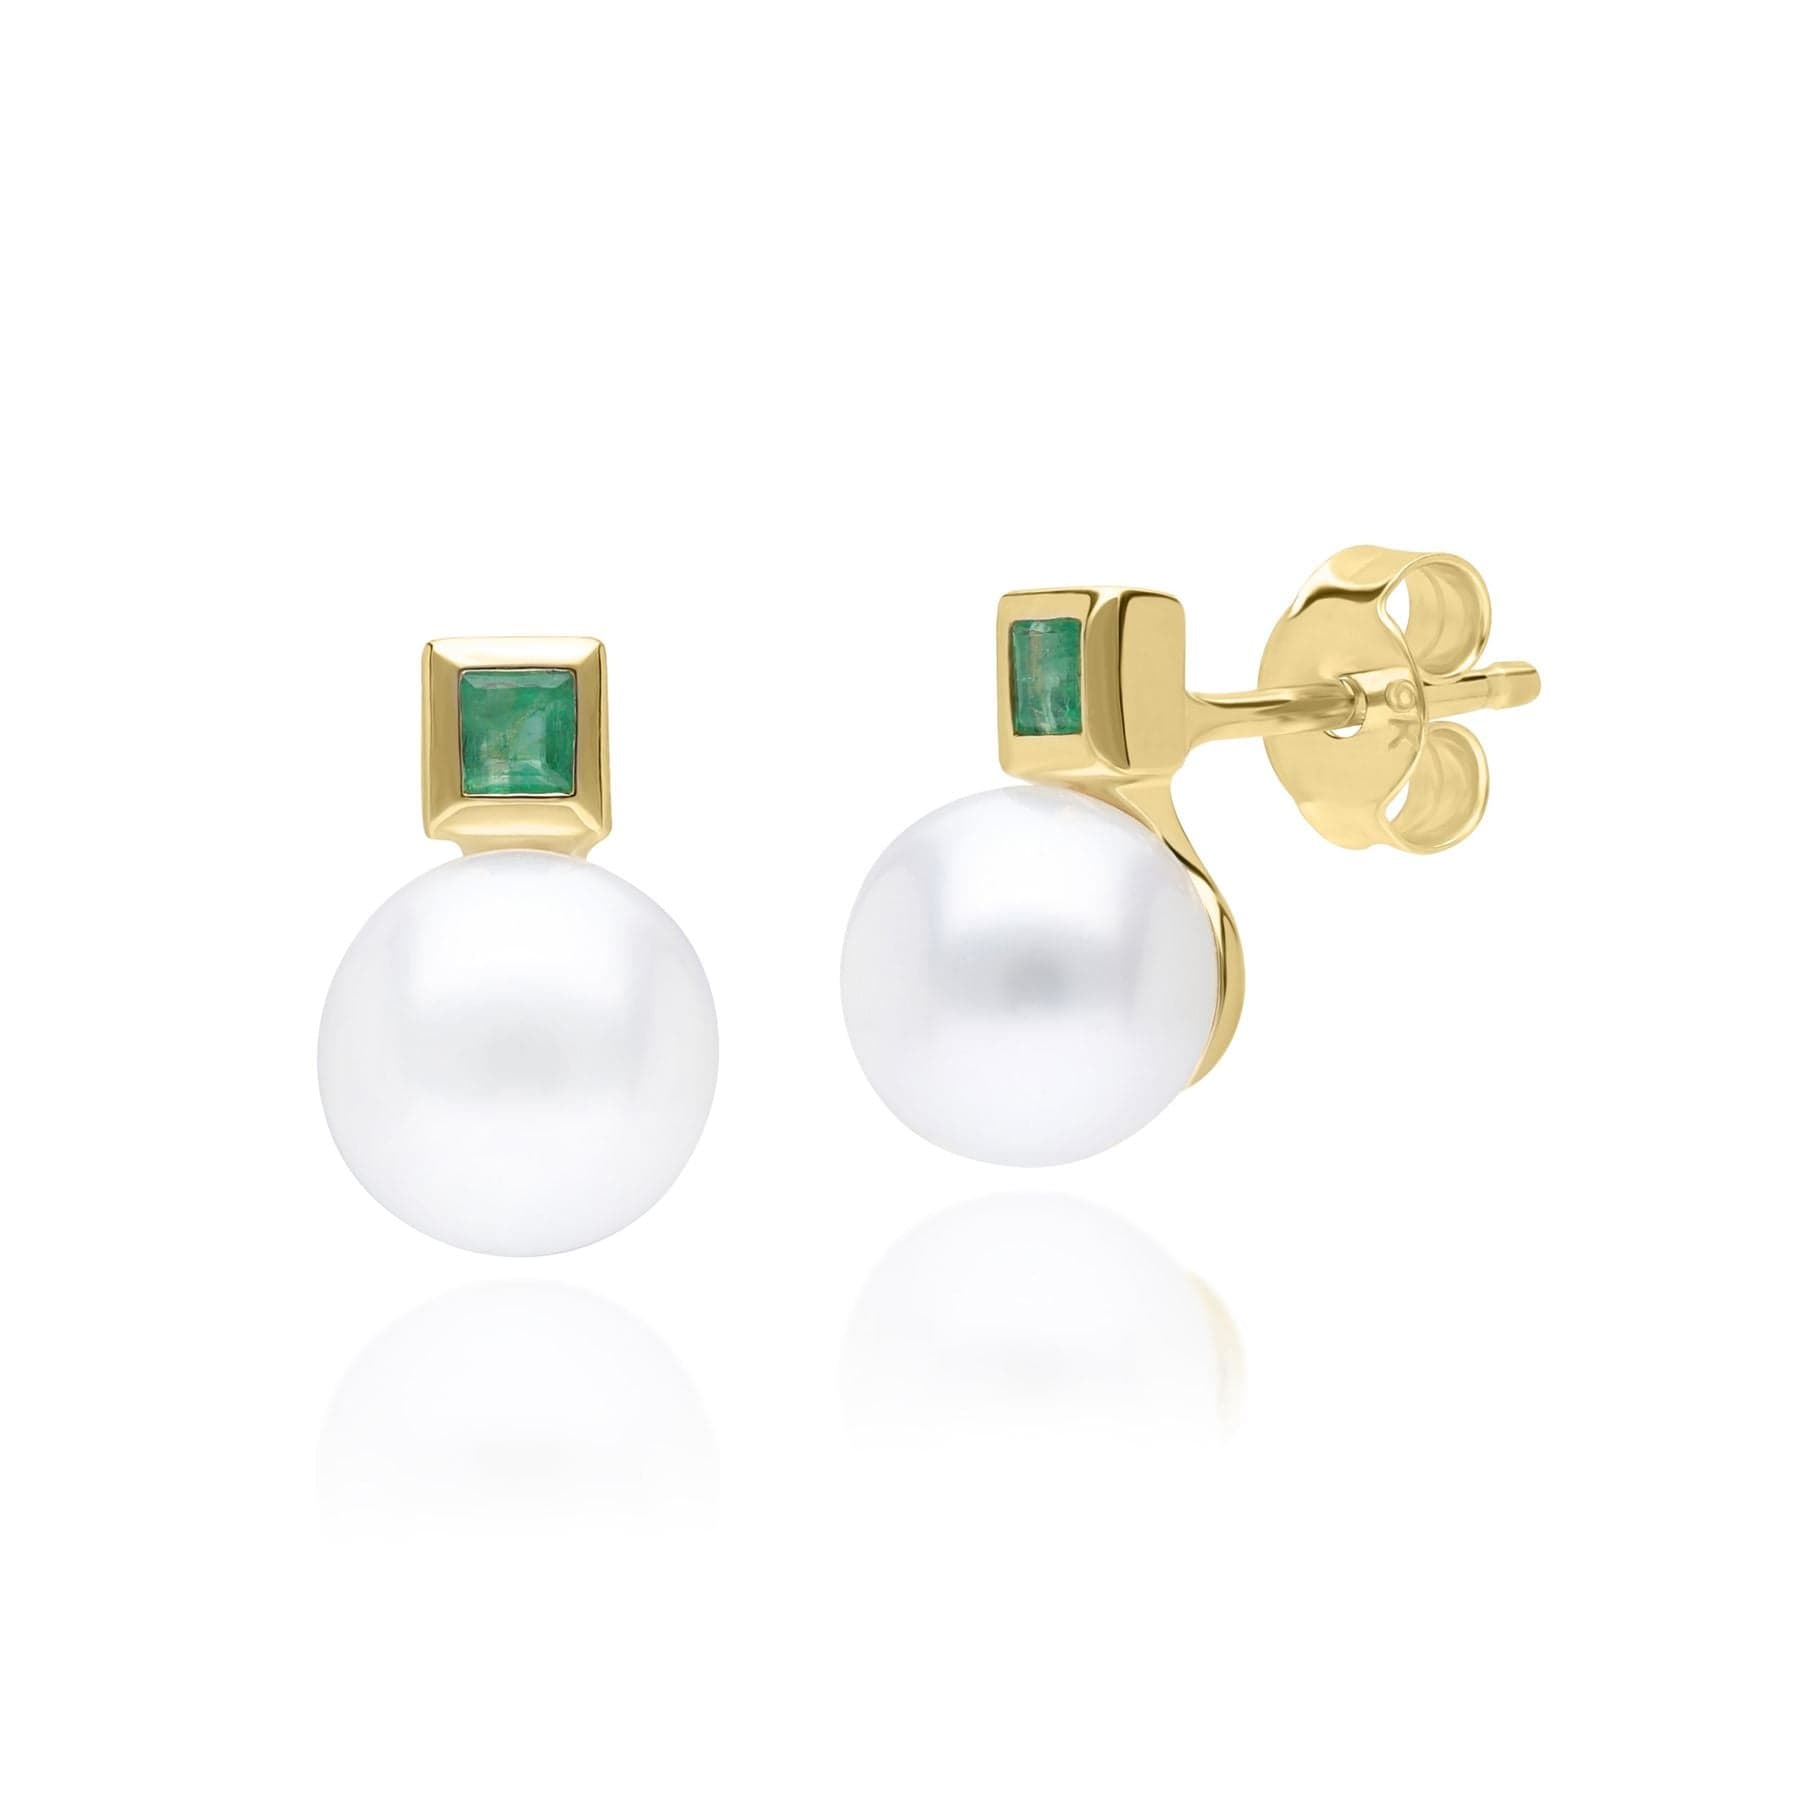 Modern Pearl & Square Emerald Stud Earrings in 9ct Yellow Gold - Gemondo